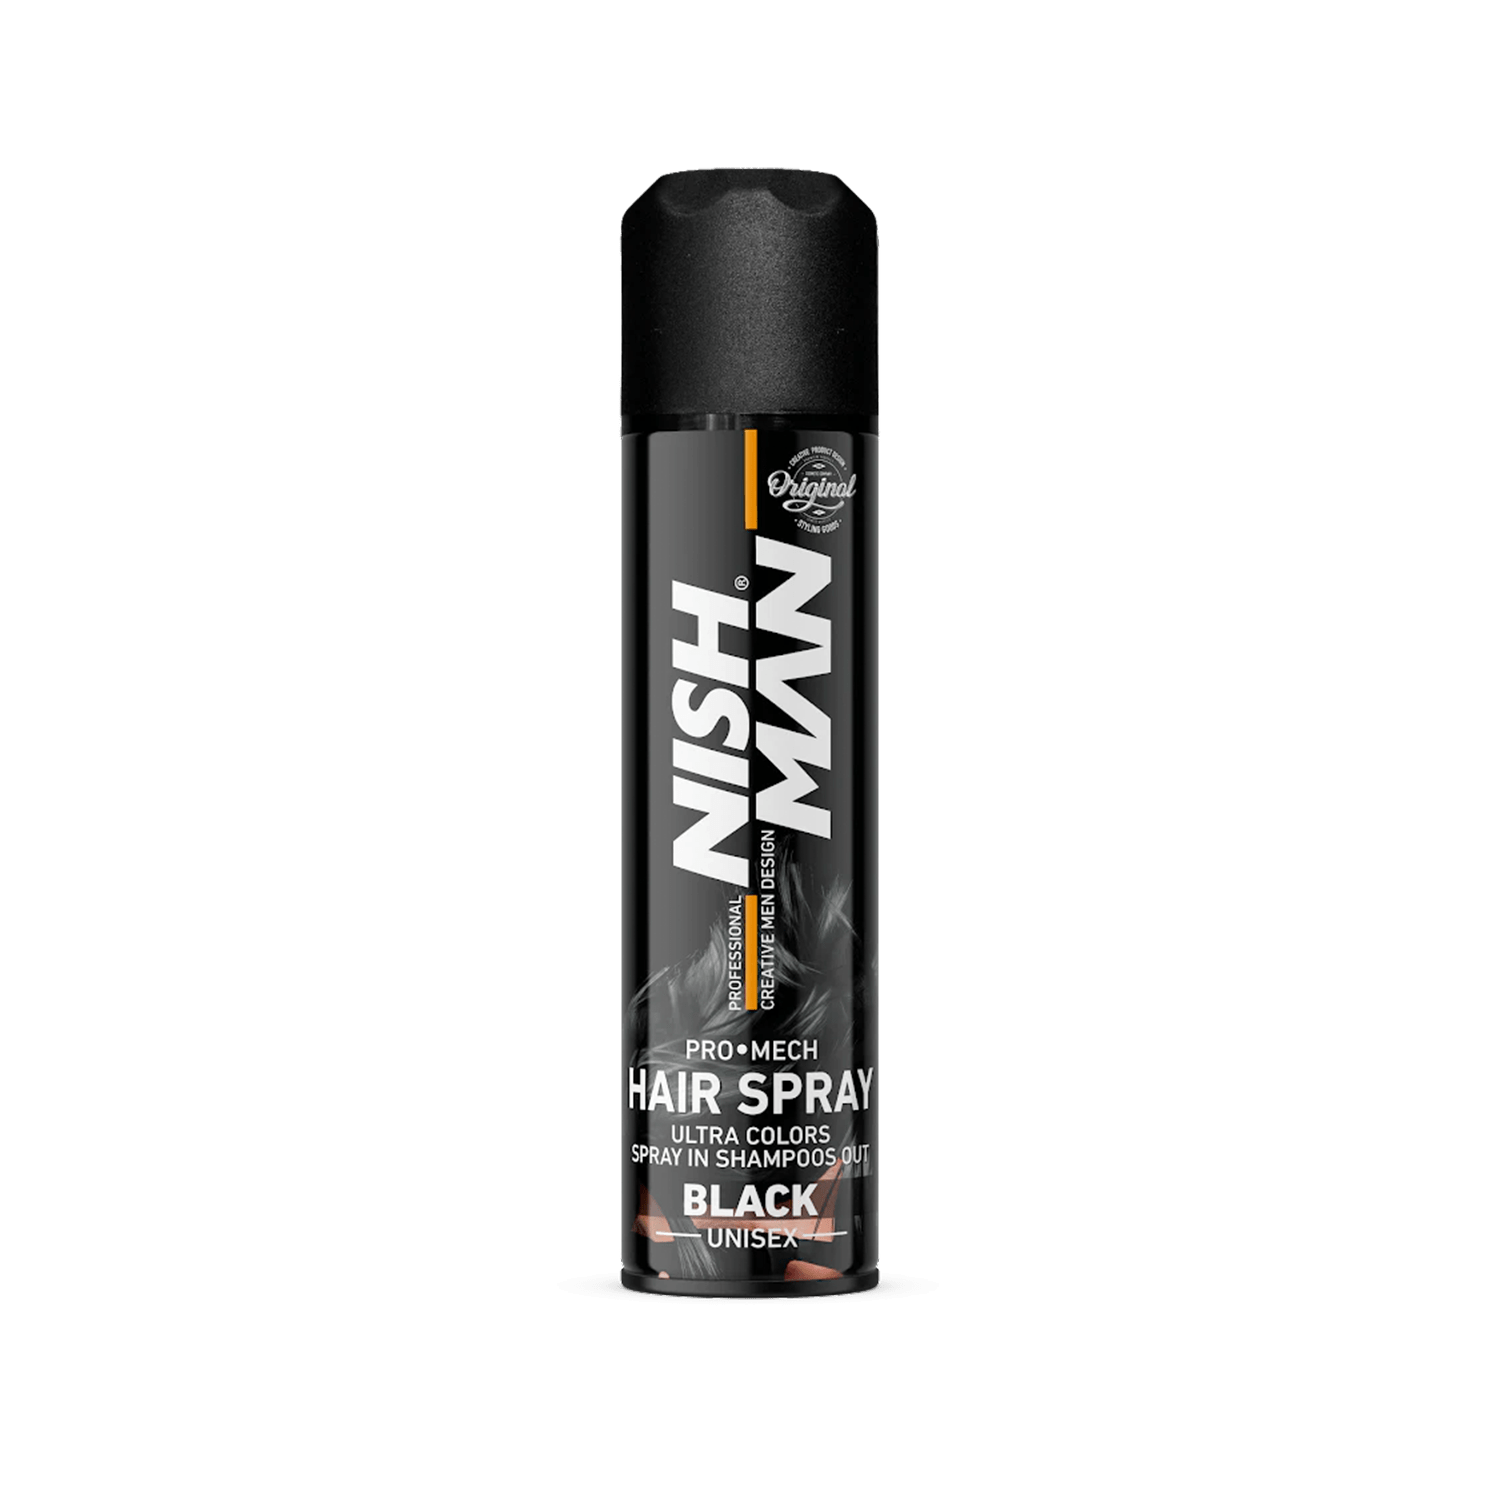 Nish man hair coloring mech spray – black 150ml